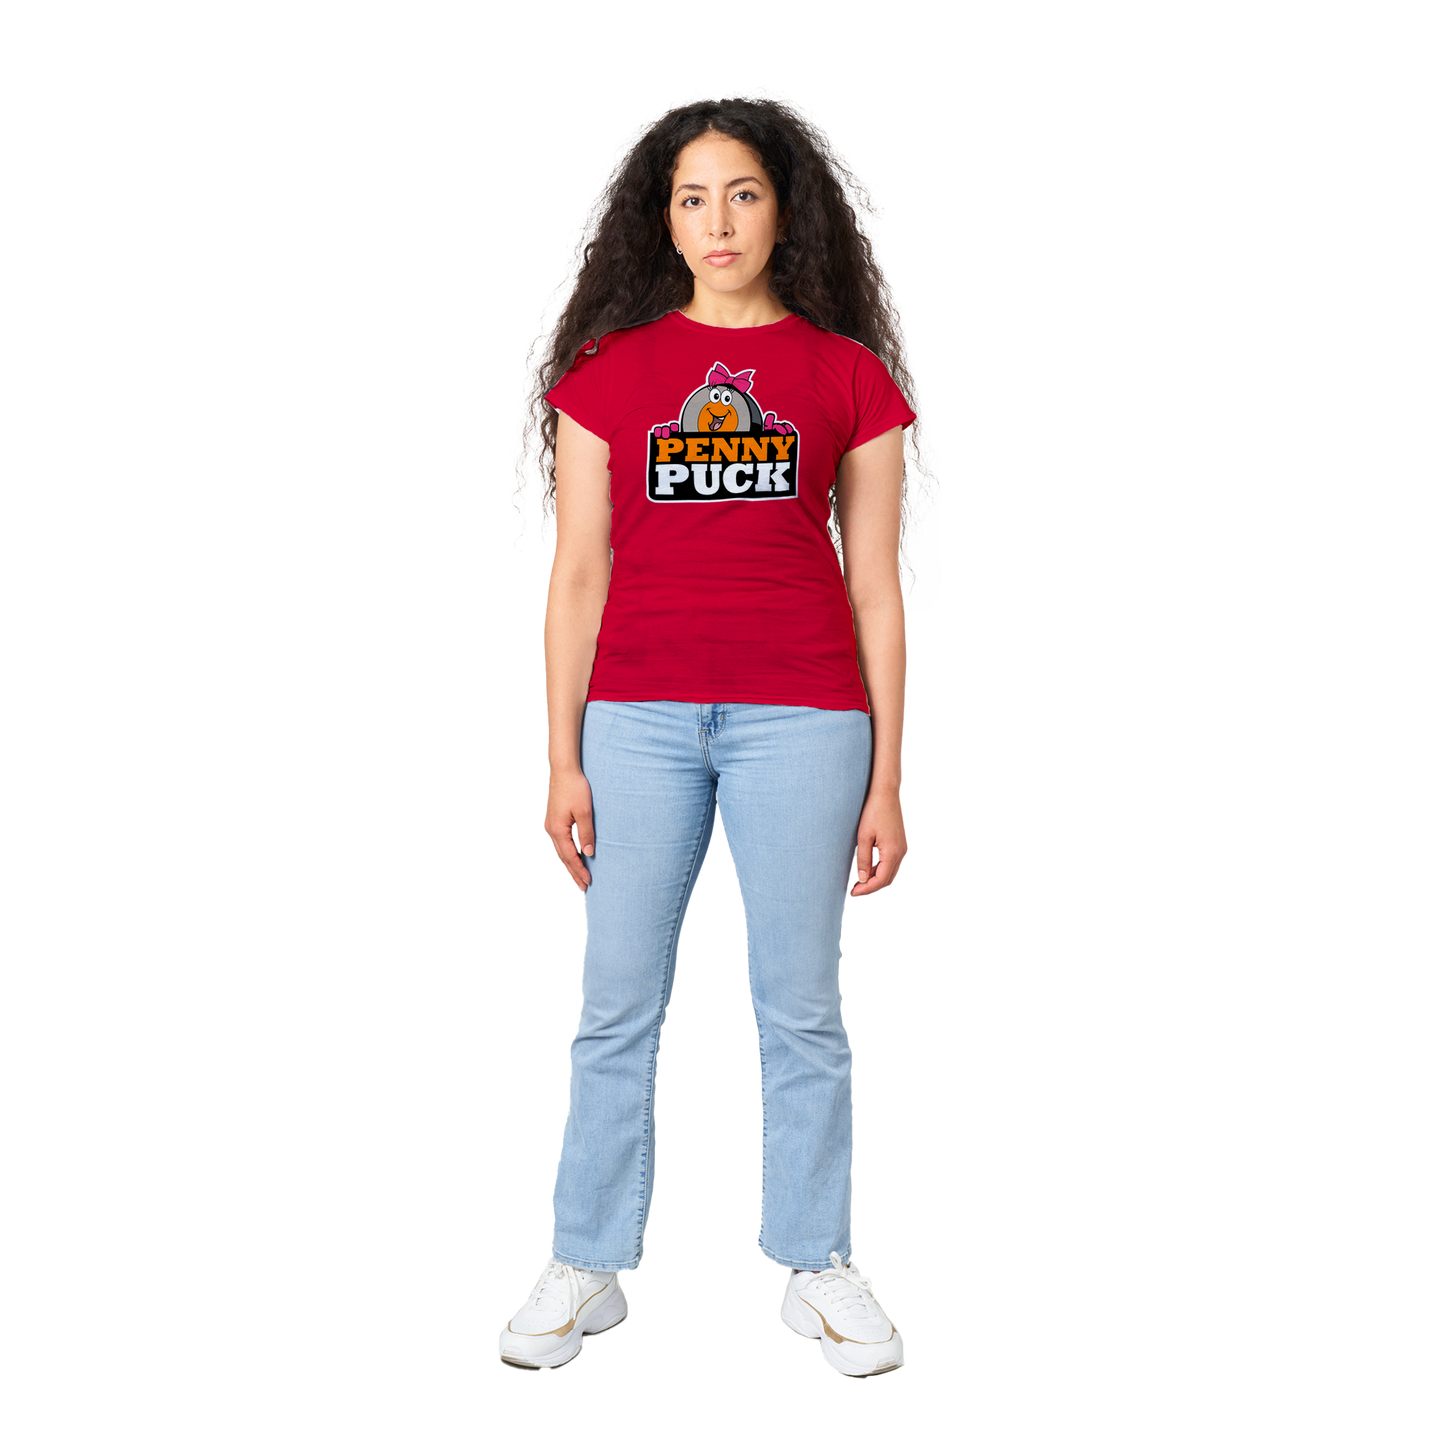 Penny Puck Peek Classic Womens Crewneck T-shirt